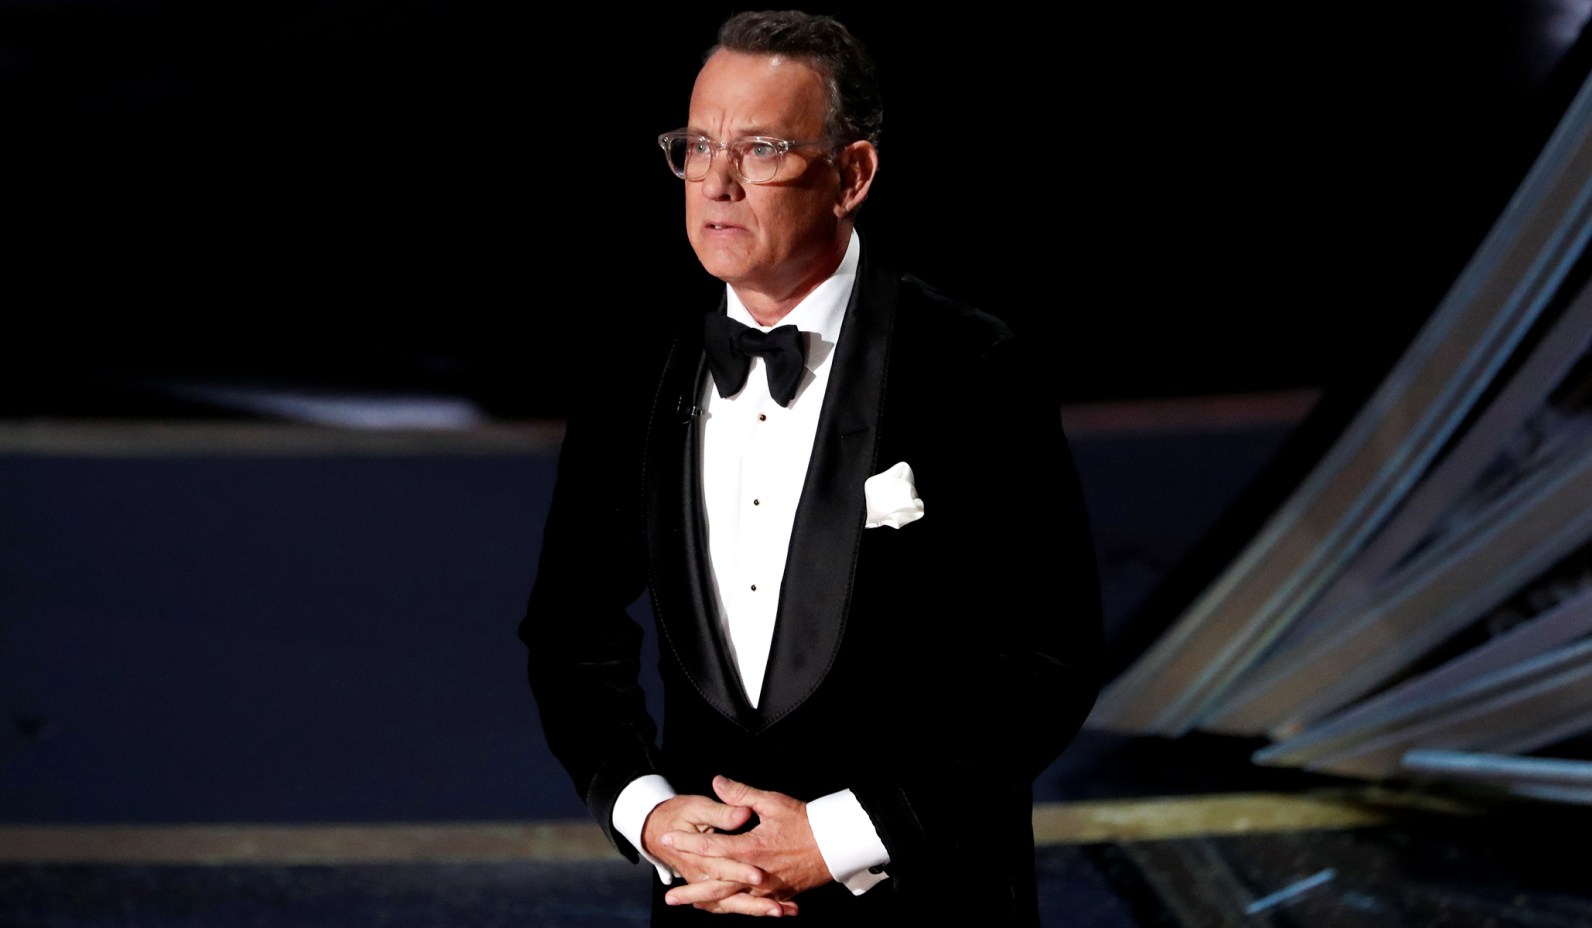 Tom-Hanks at the oscars